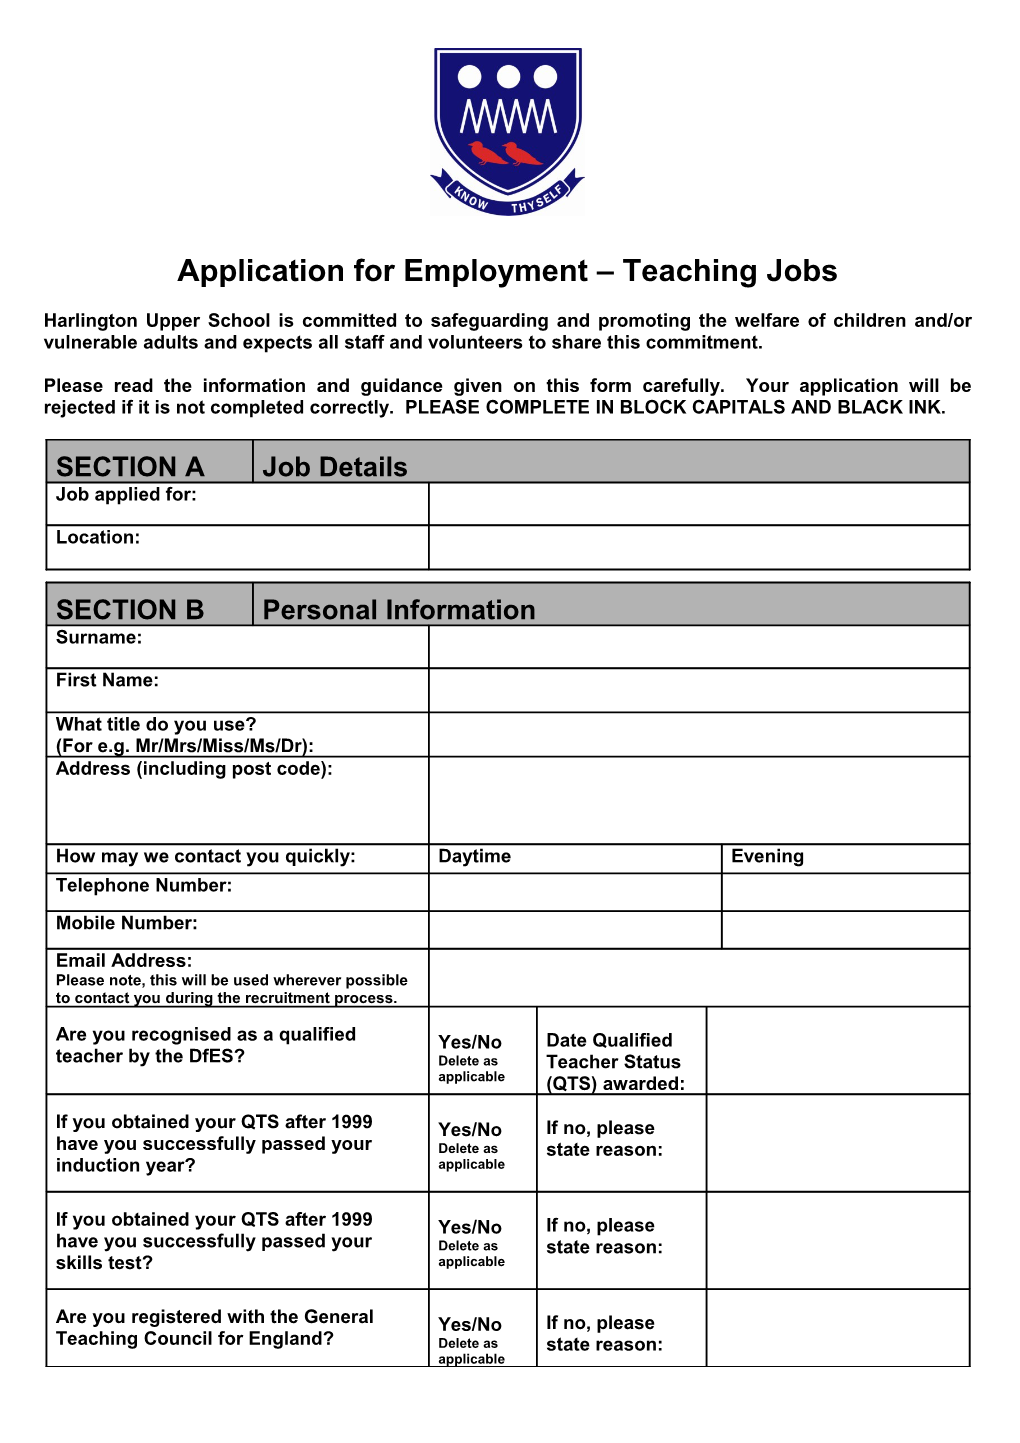 Application for Employment Teaching Jobs